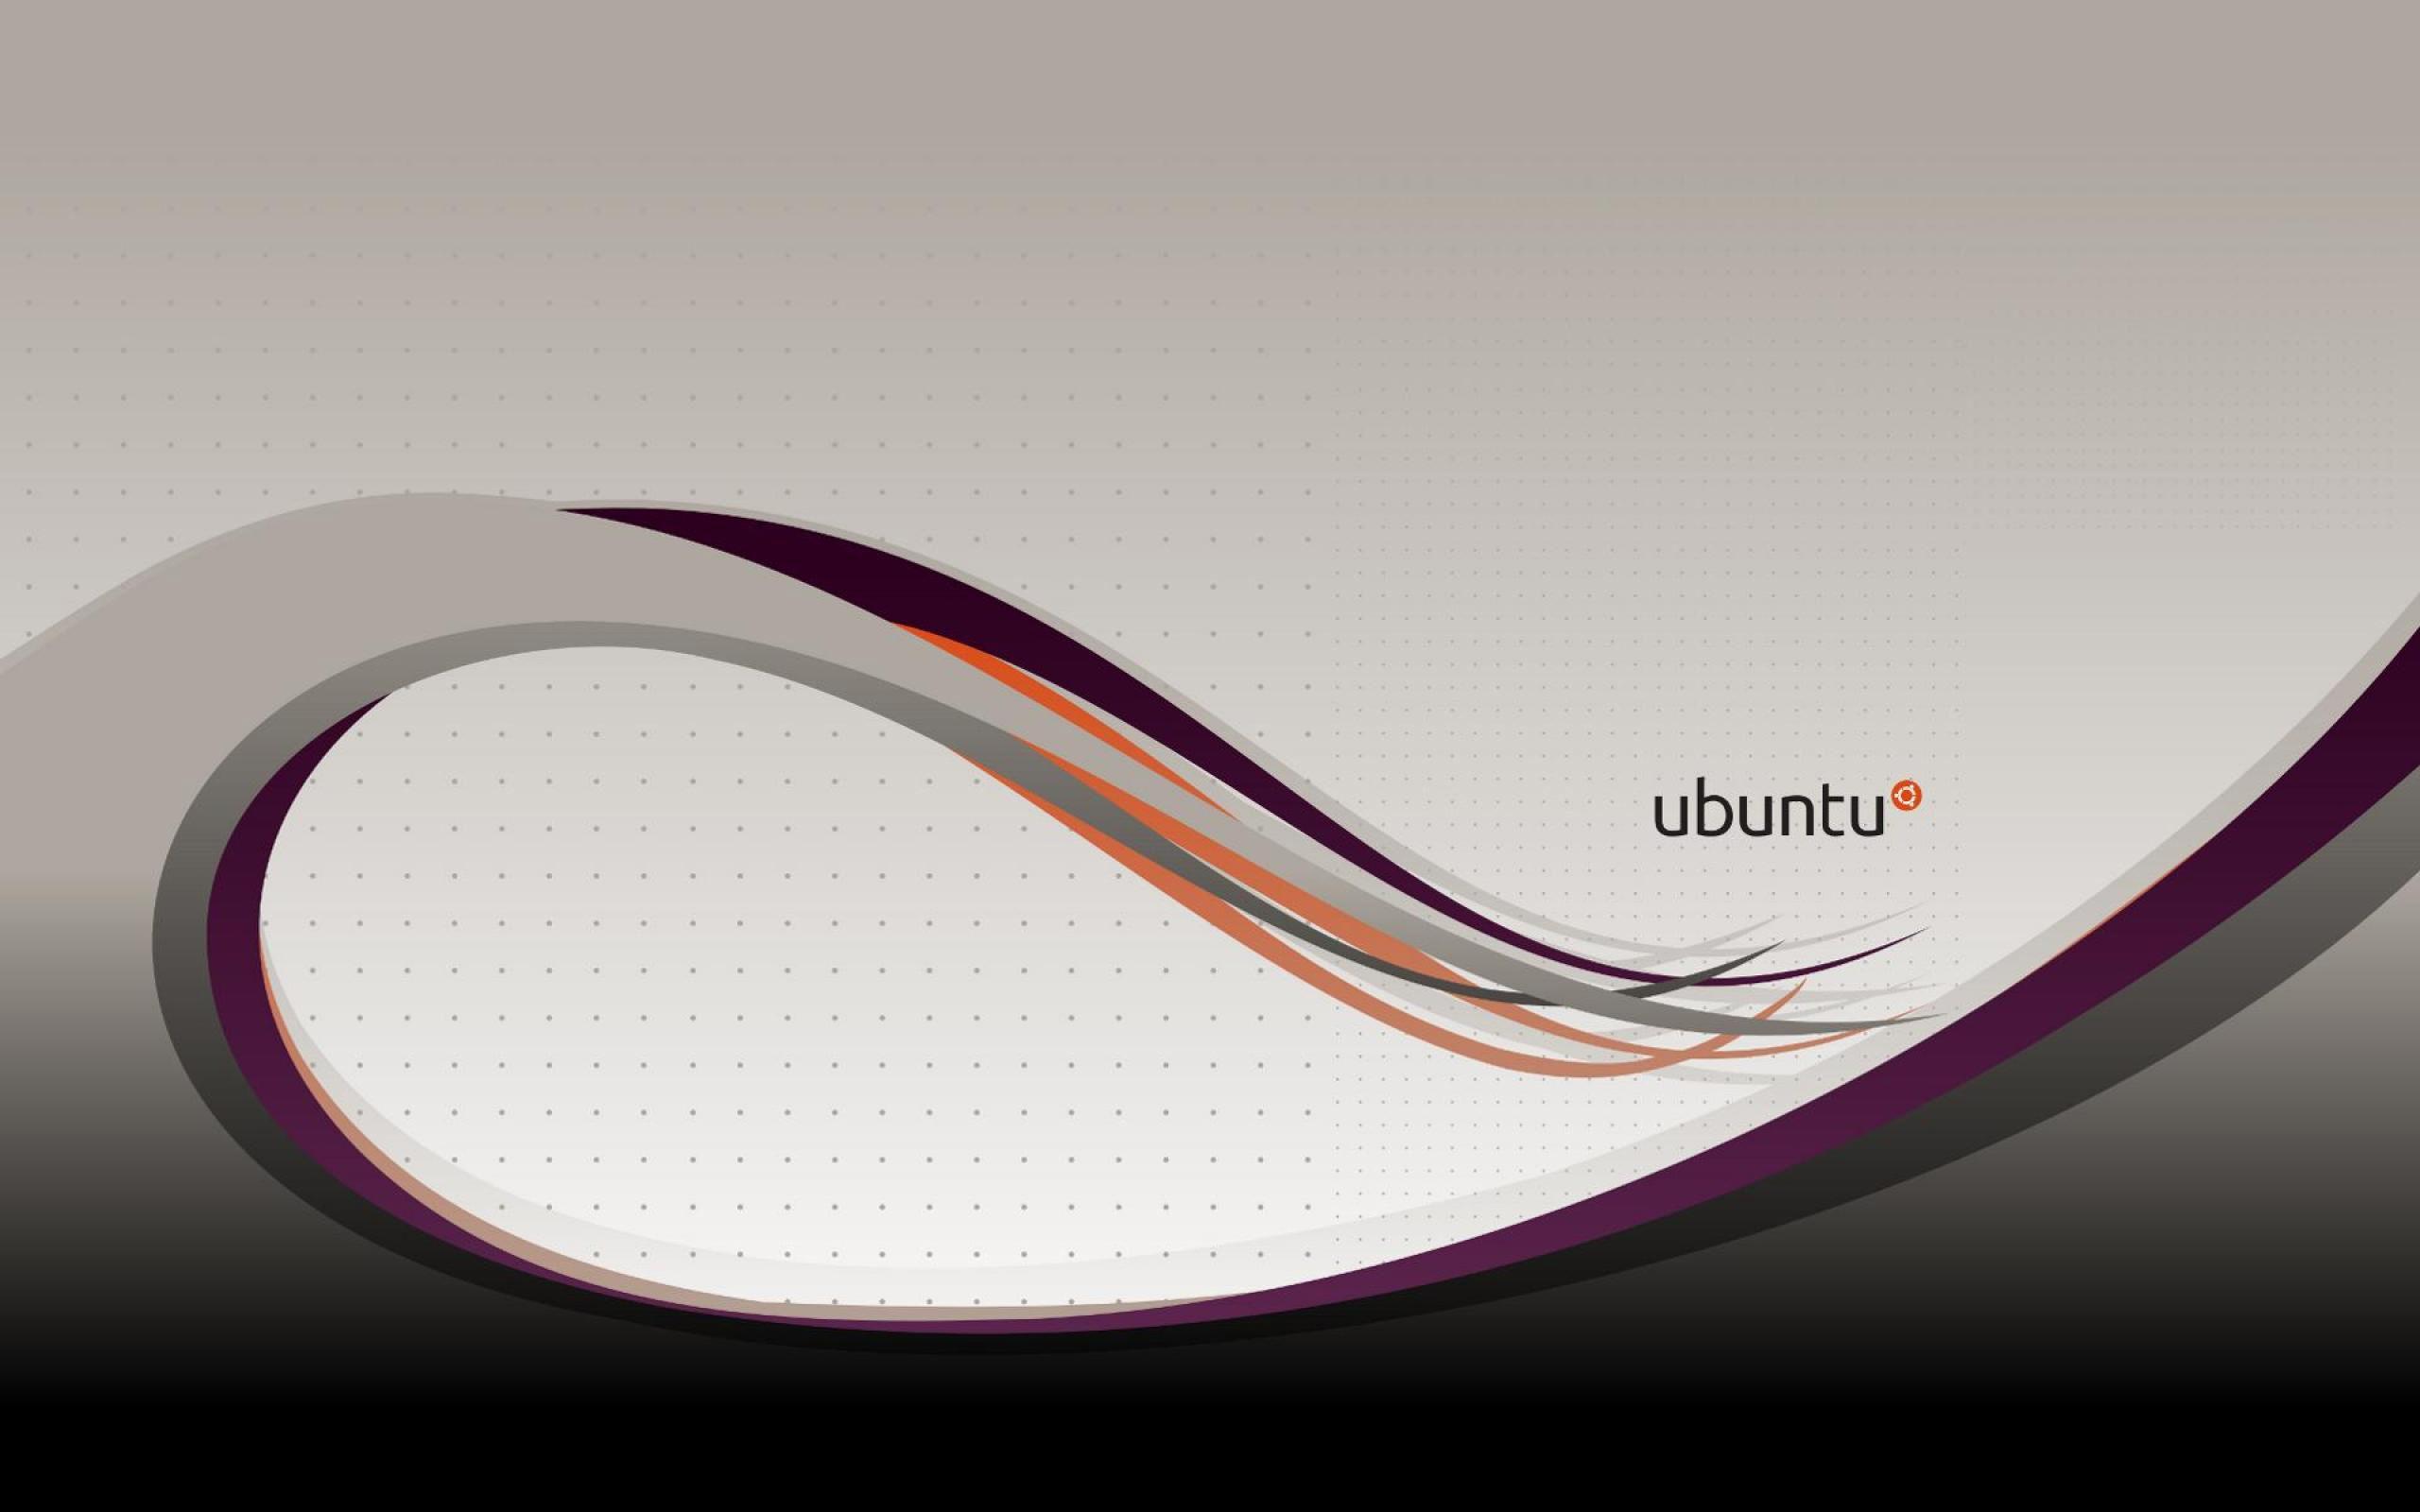 Ubuntu Wallpaper 40656 2560x1600 px